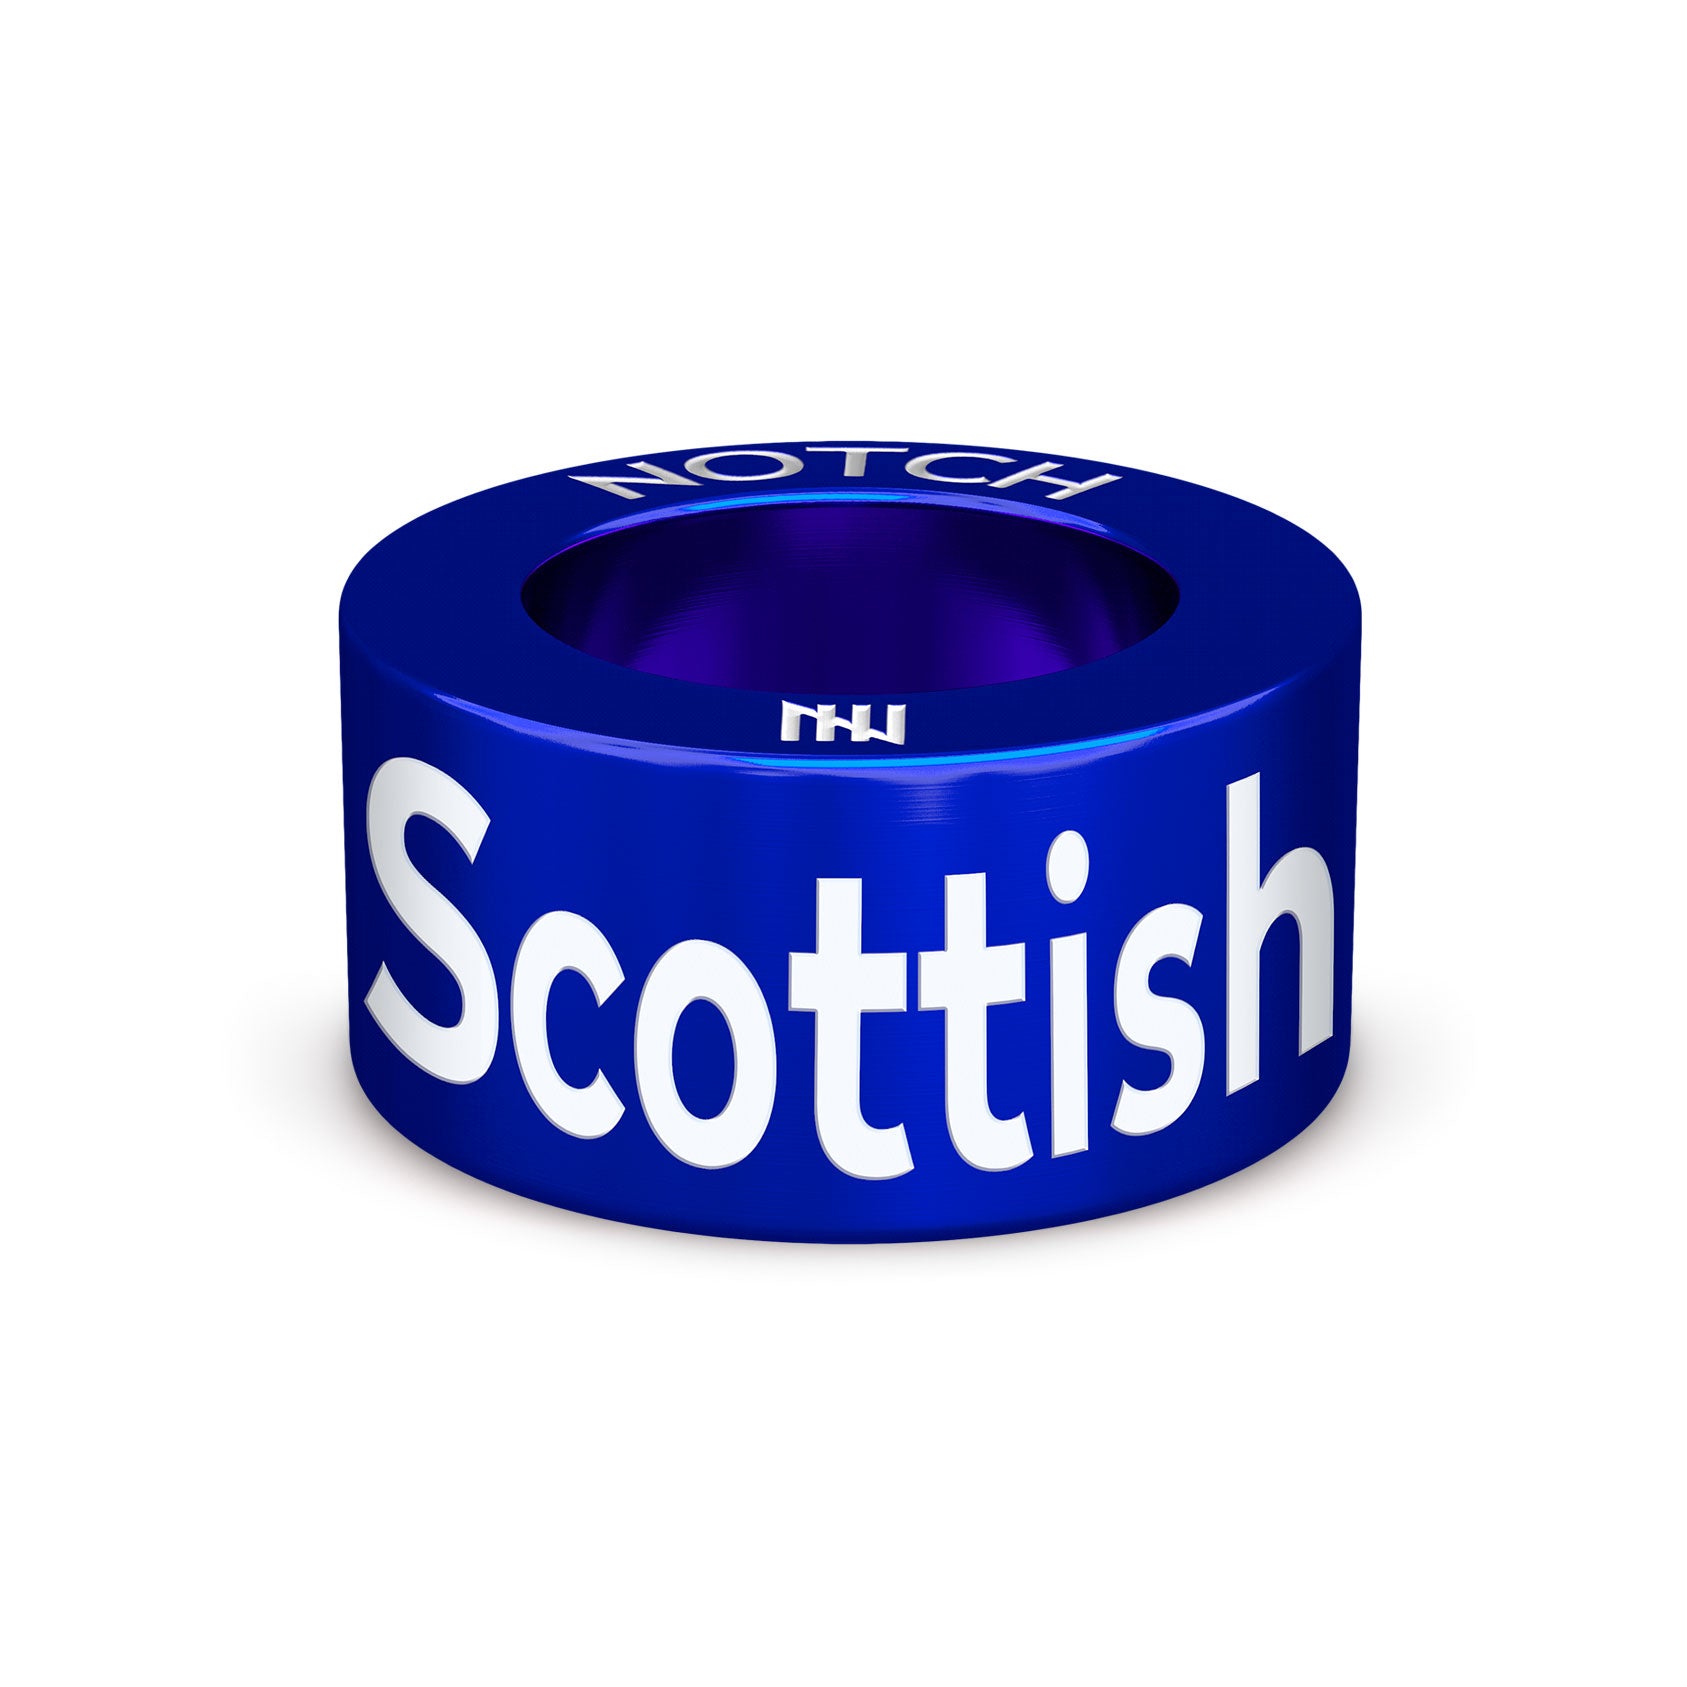 Scottish Premiership Team NOTCH Charm (Full List)